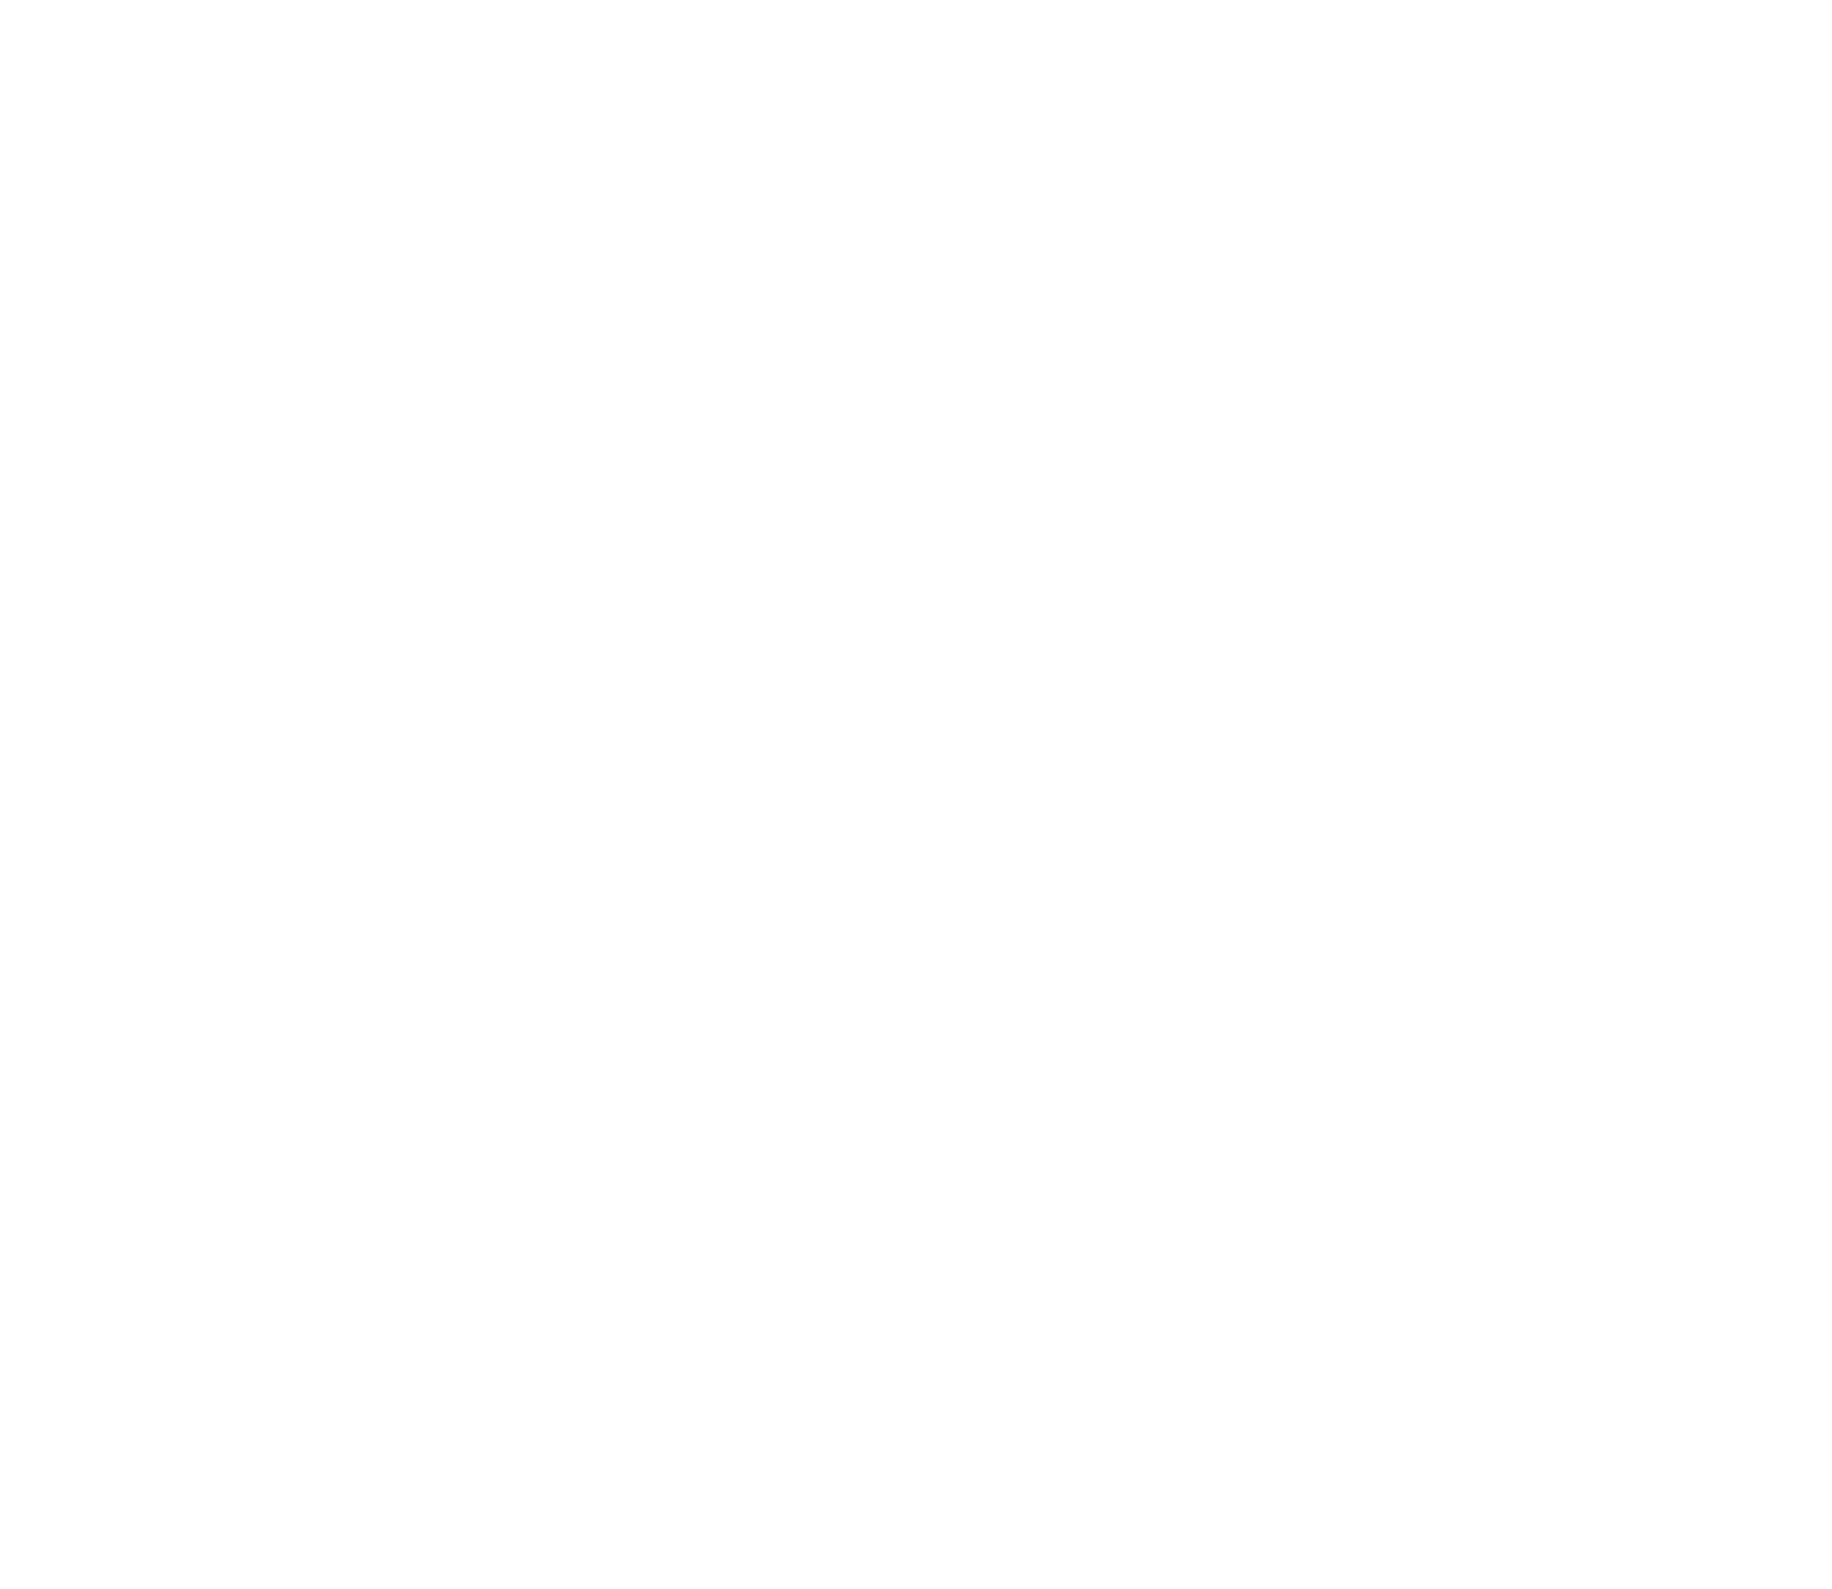 Fleet Cost & Care